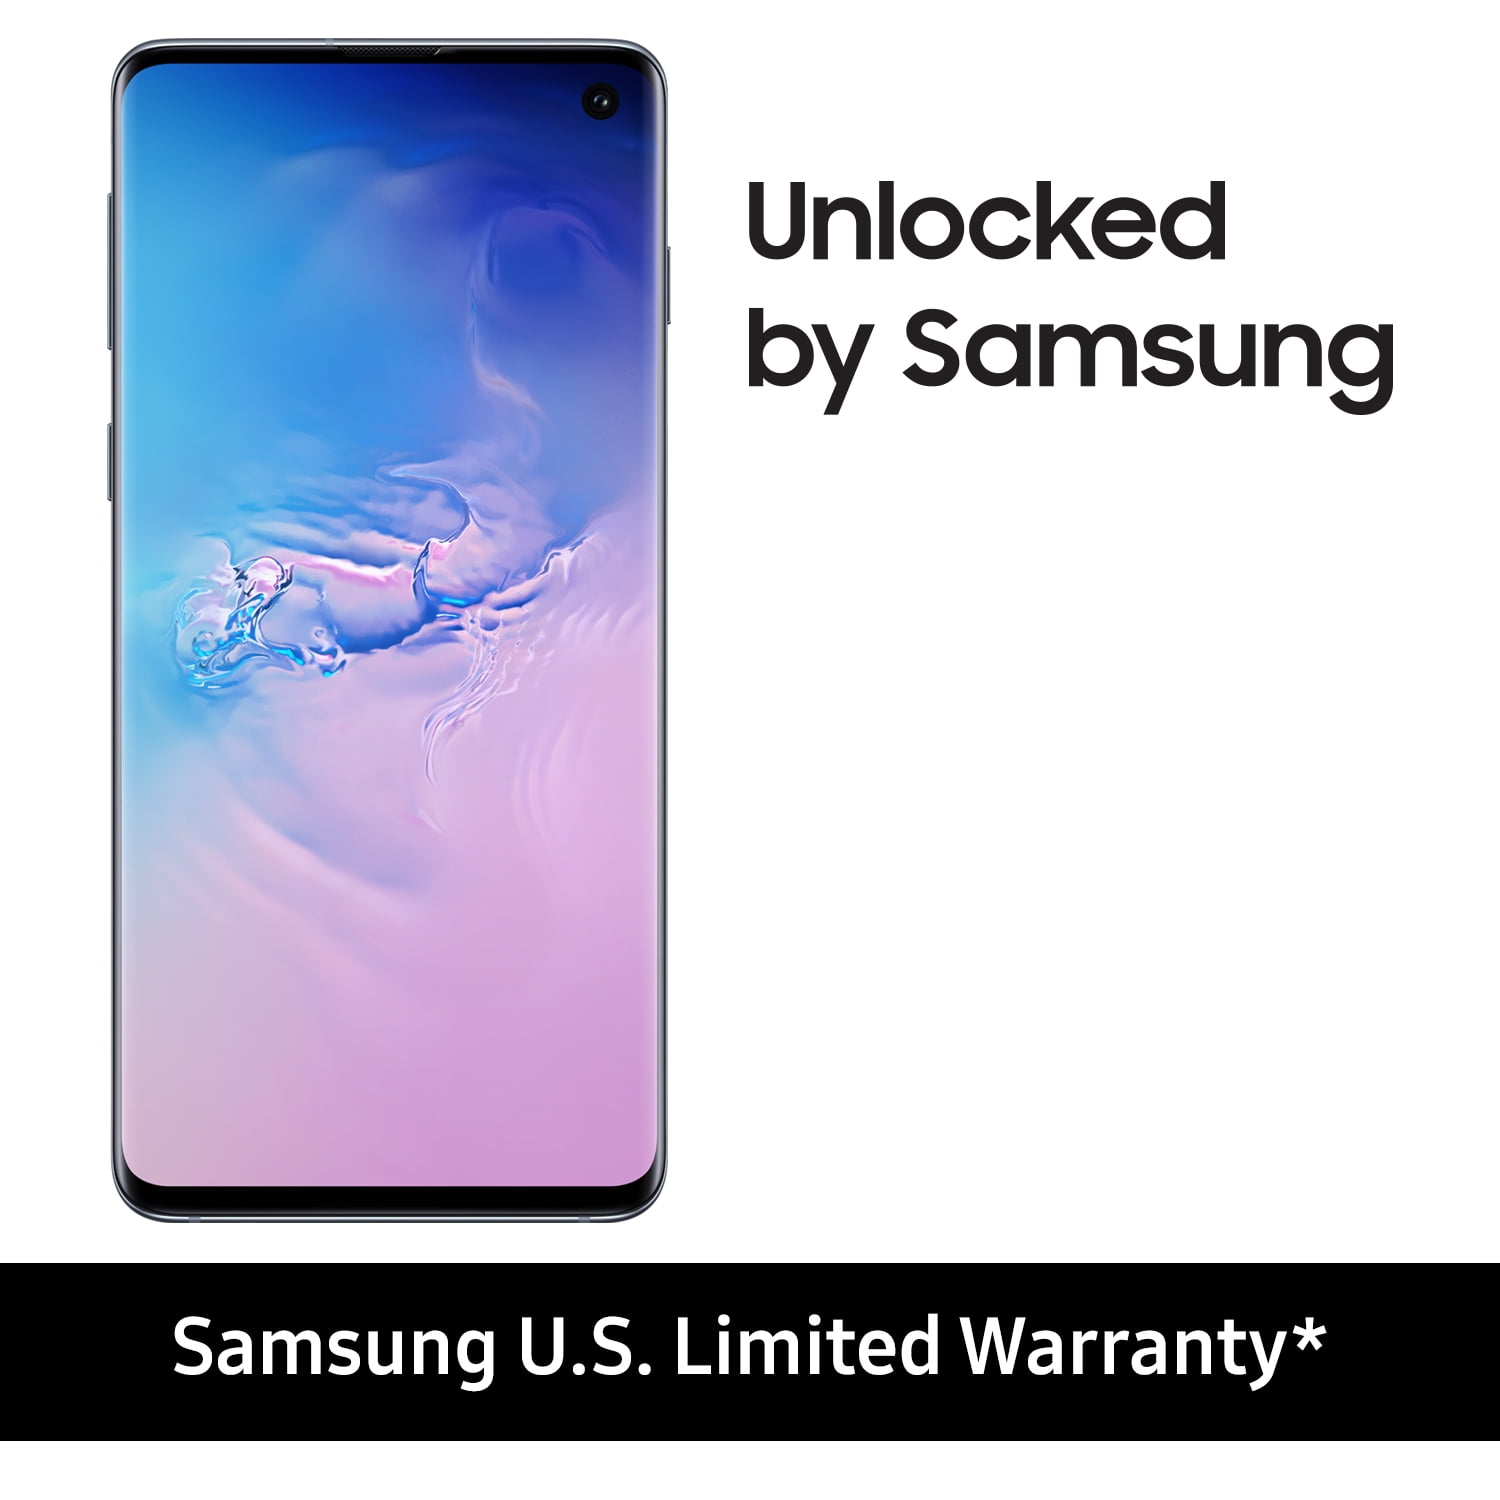 SAMSUNG Unlocked Galaxy S10, 128GB Blue - Smartphone